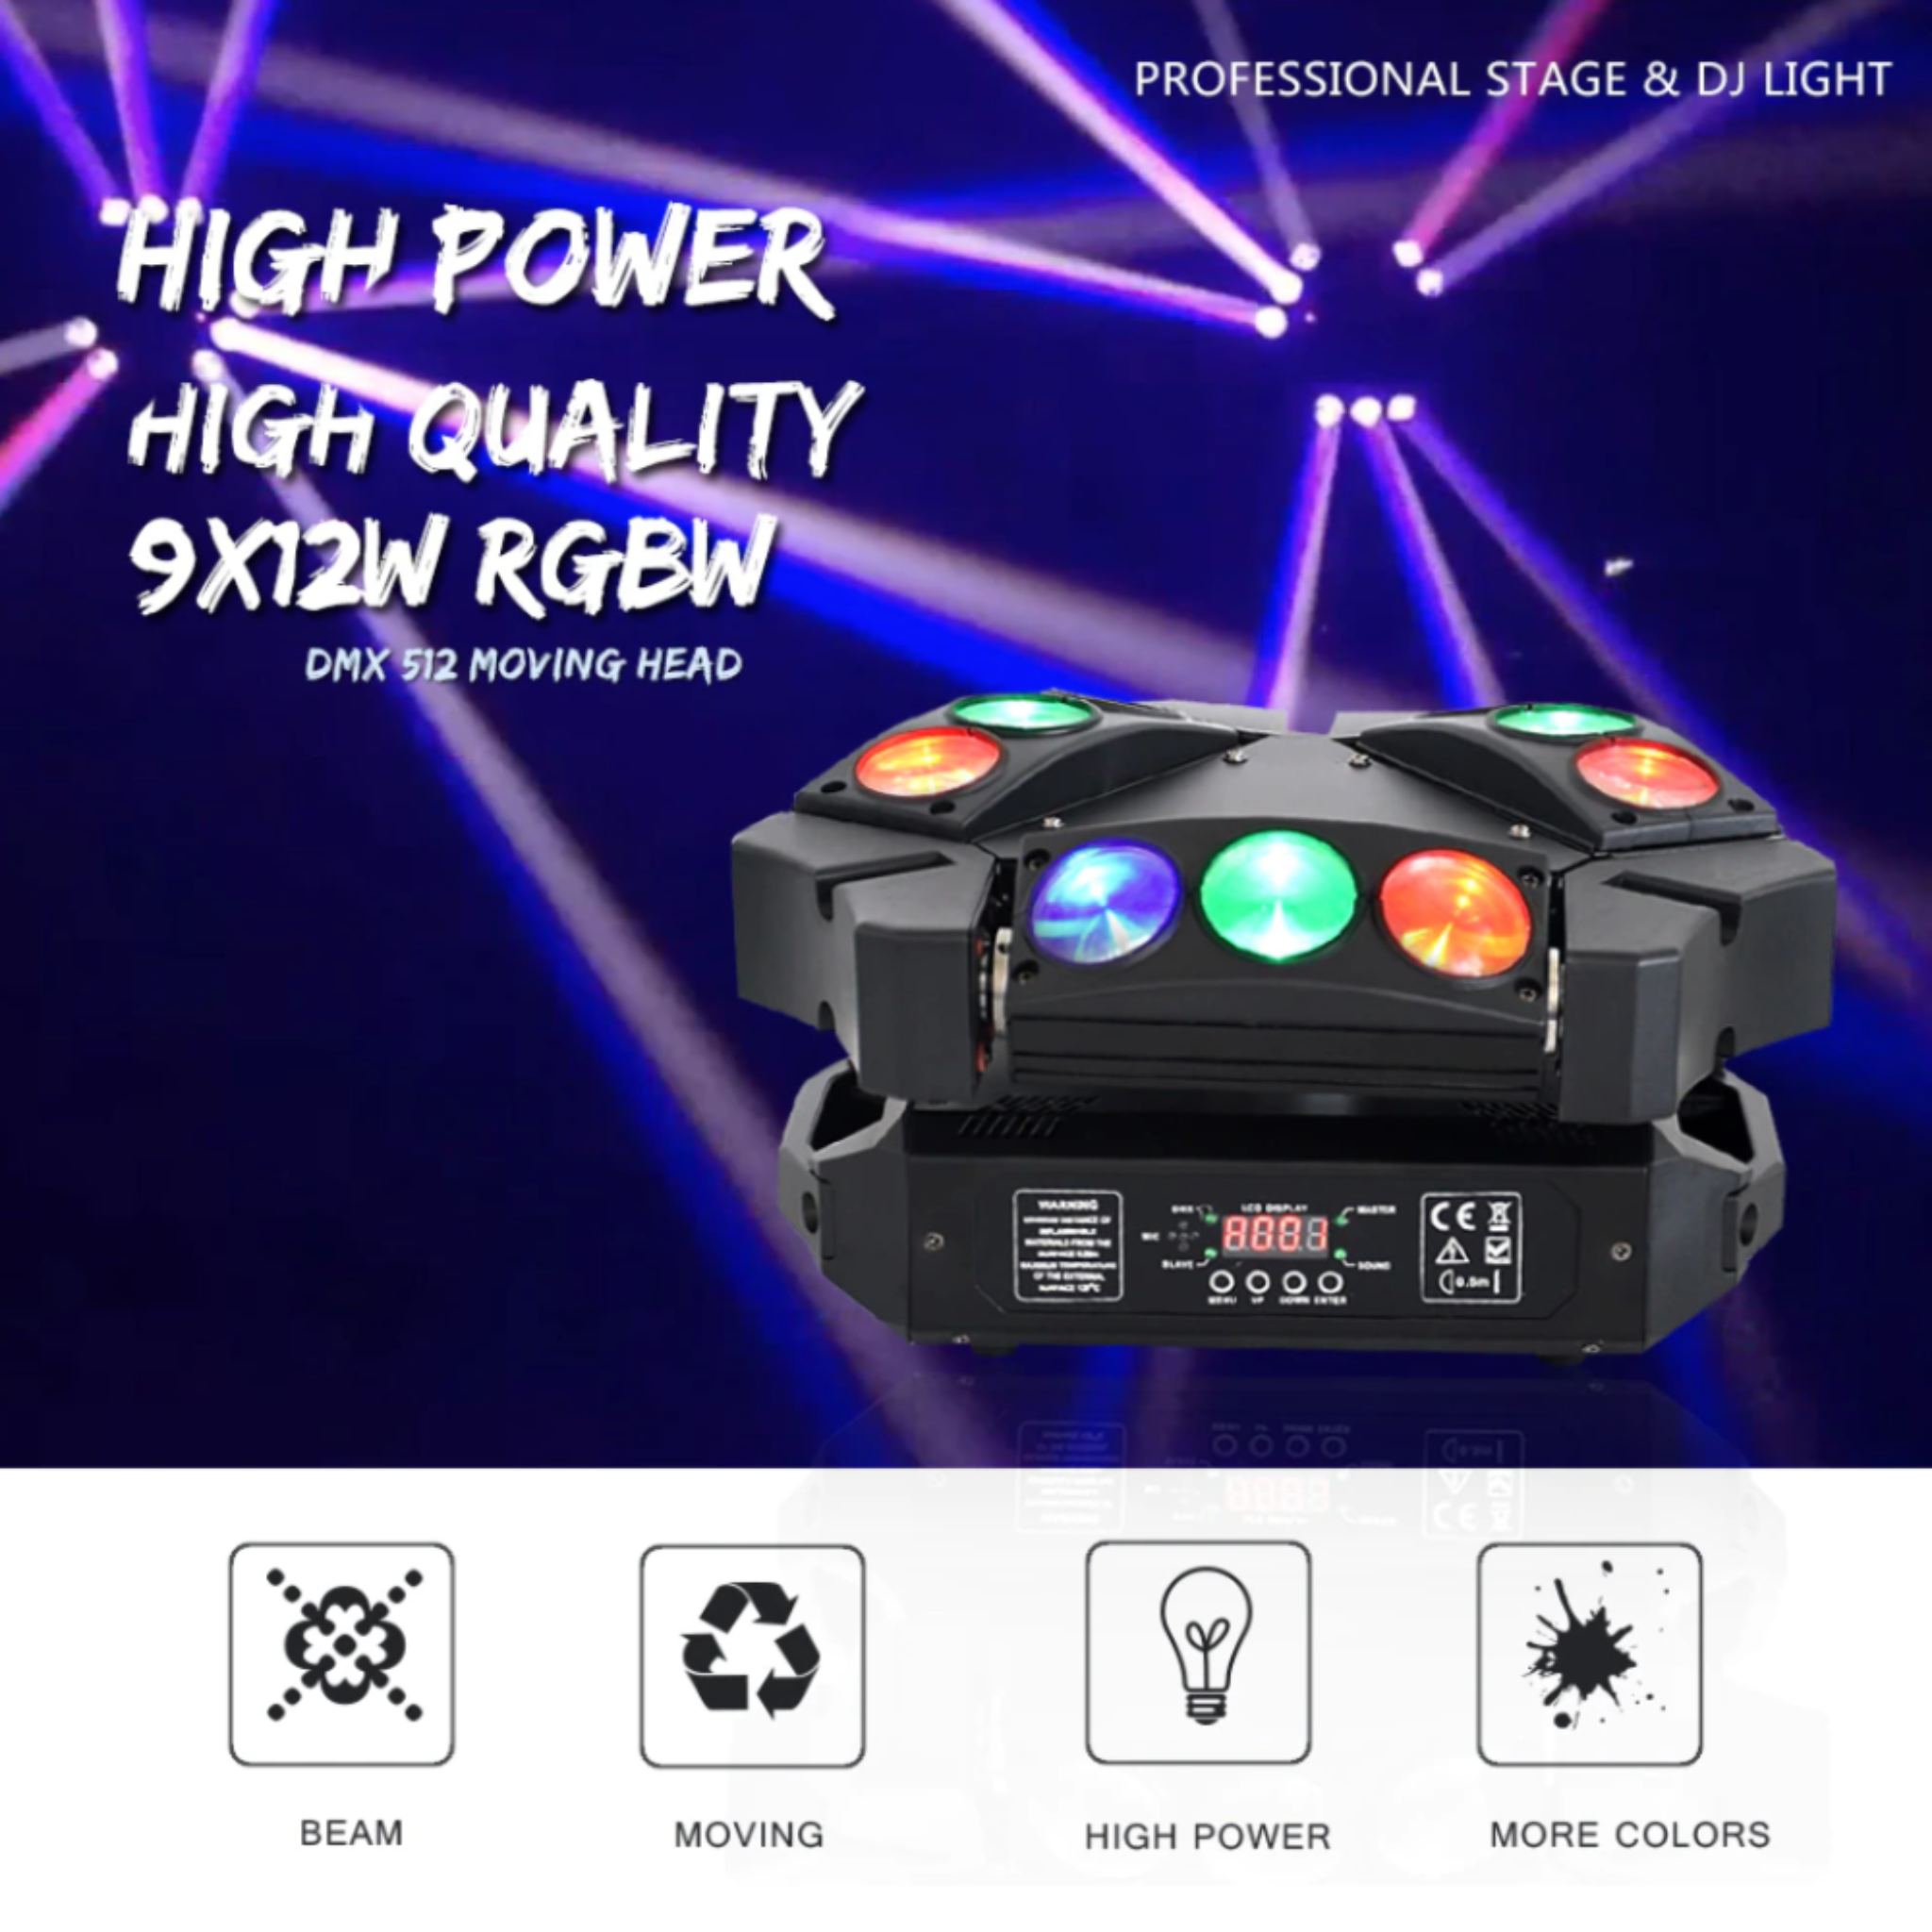 Sonido Live RGBW Helicopter Spider 108W 9X12W LED DJ DMX Moving Head Light